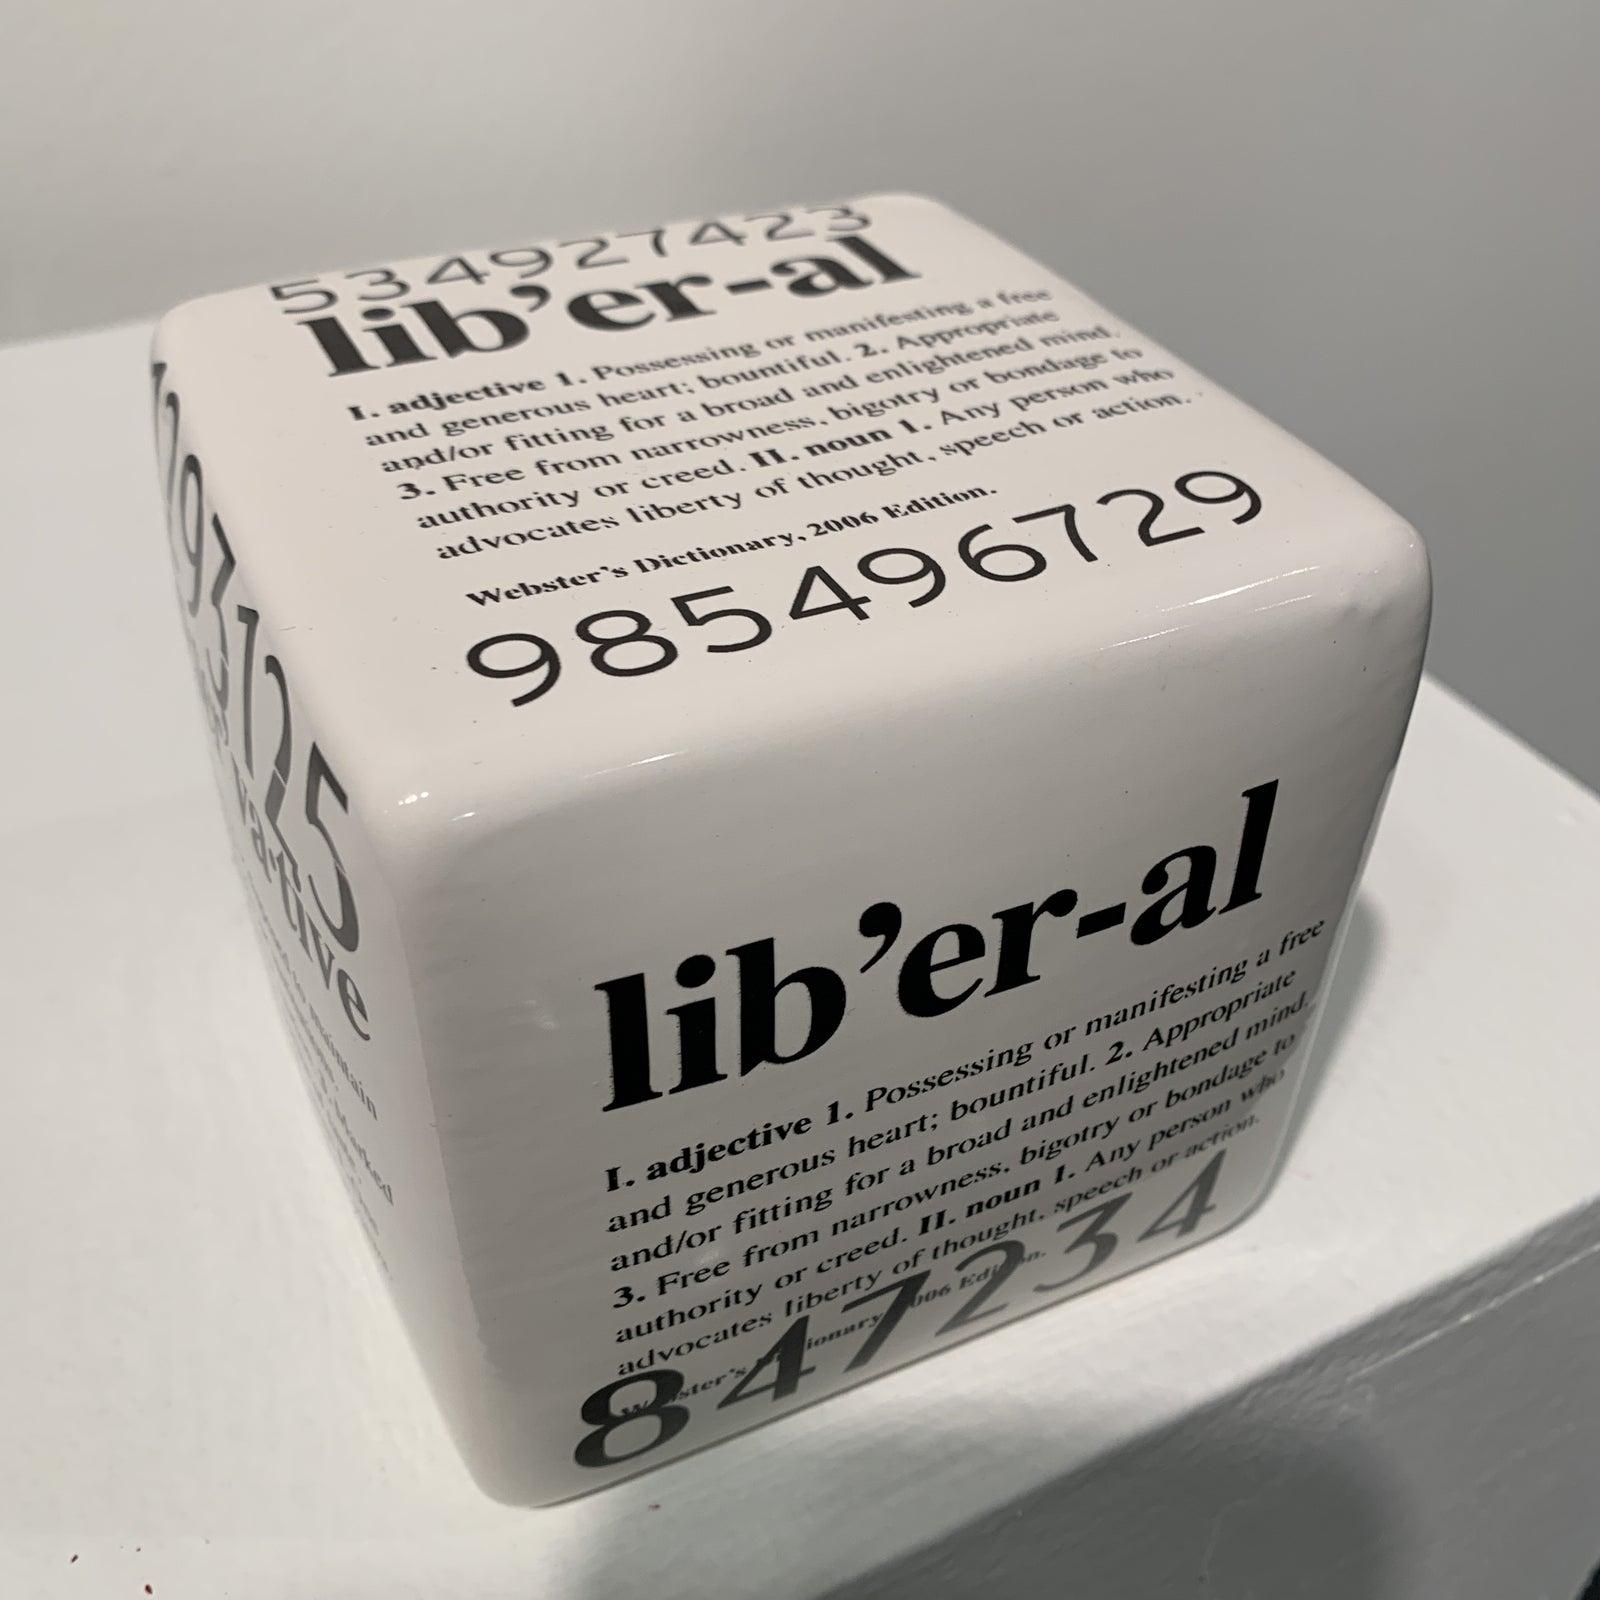 kaiser suidan cubes for sale